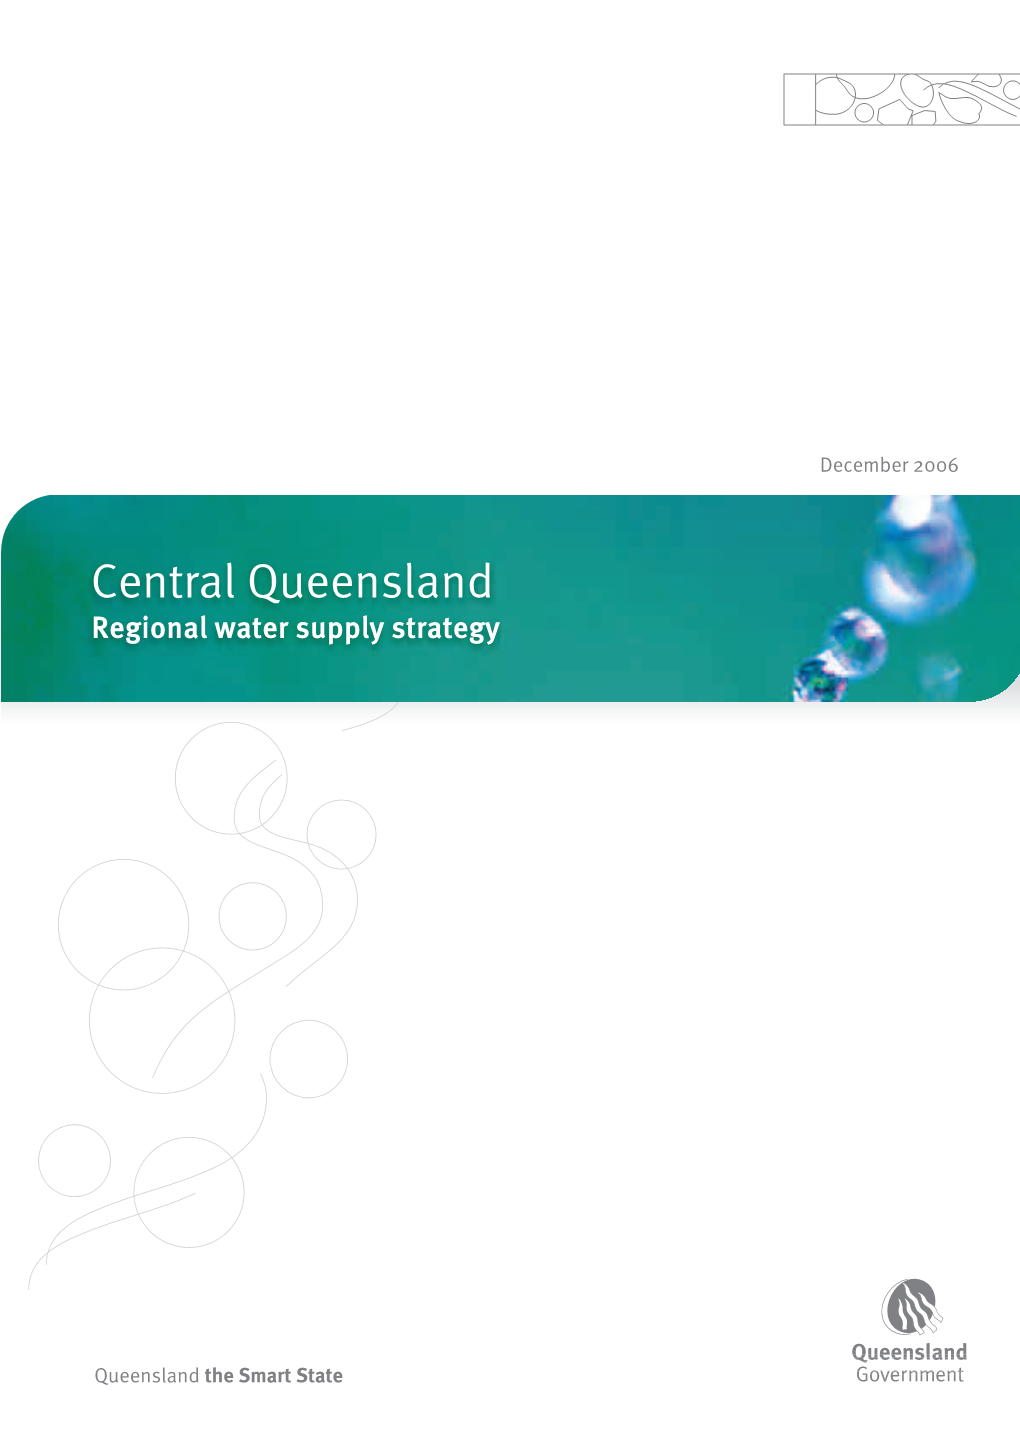 Central Queensland Regional Water Supply Strategy, December 2006